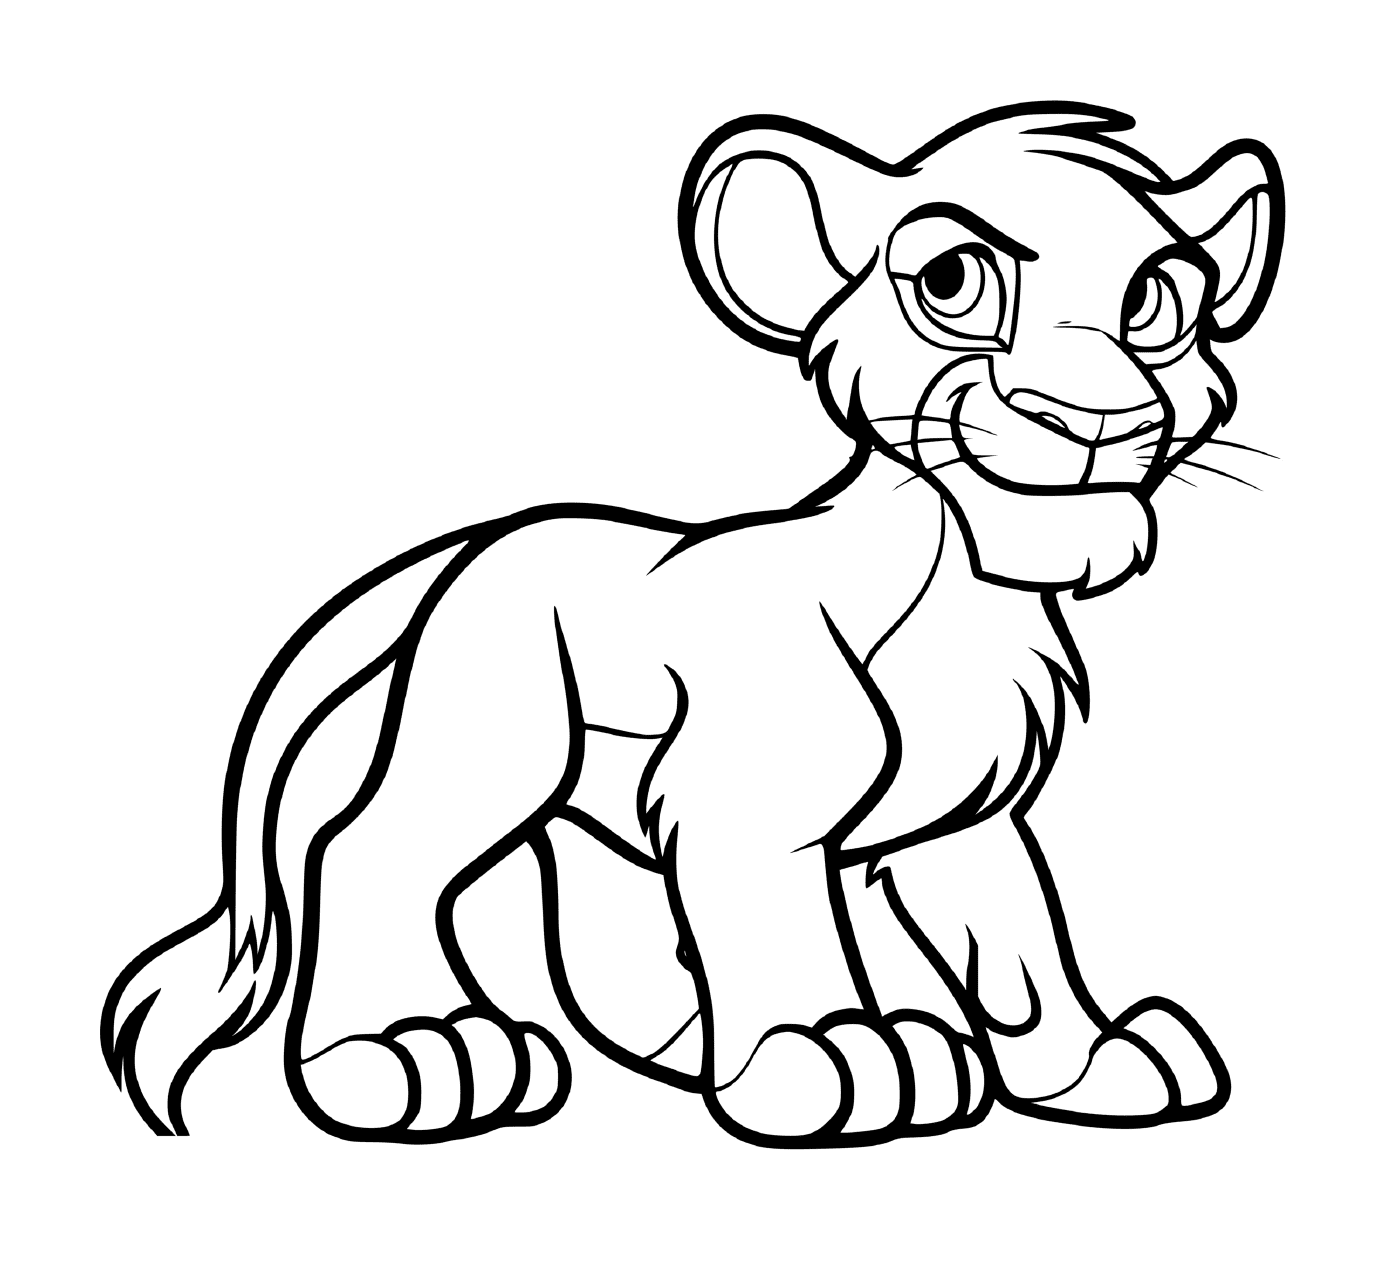  Simba, valiente león 